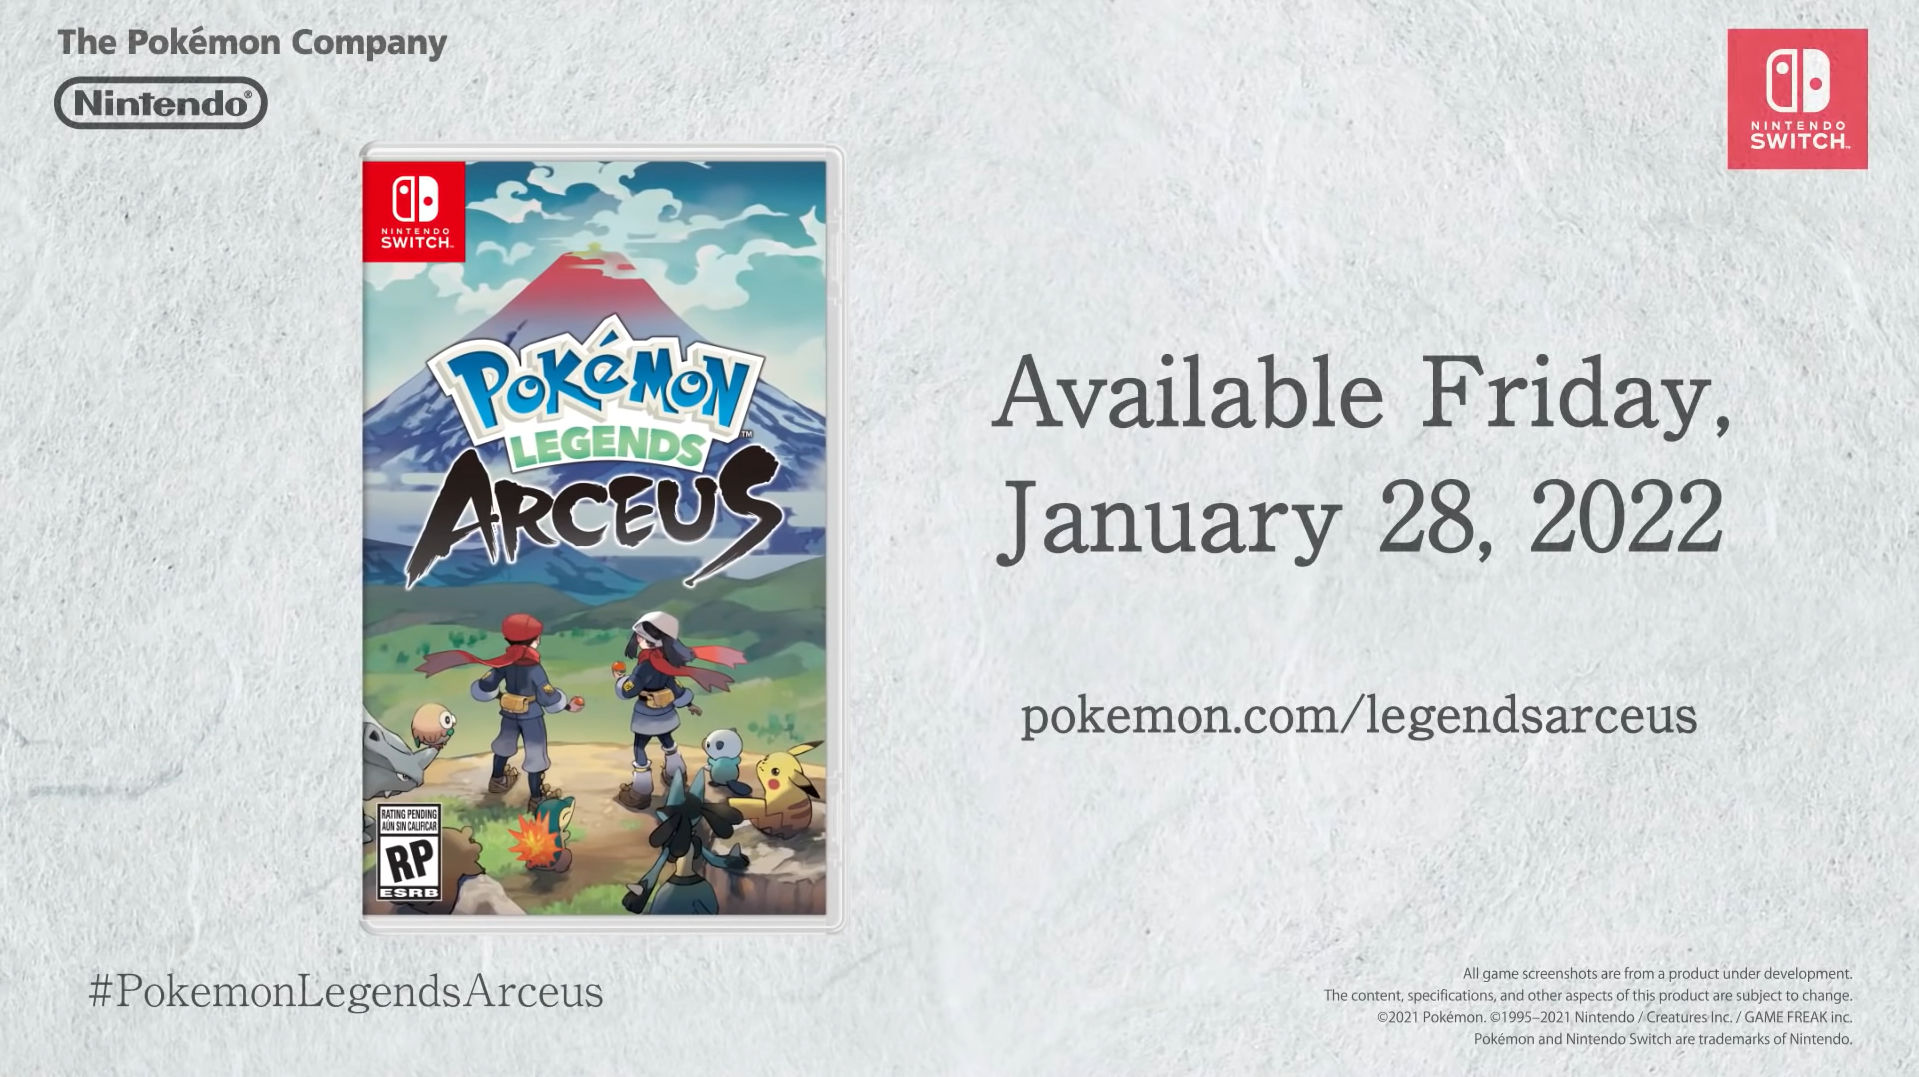 Pokémon Legends Arceus Gameplay Overview! (Nintendo Switch) 